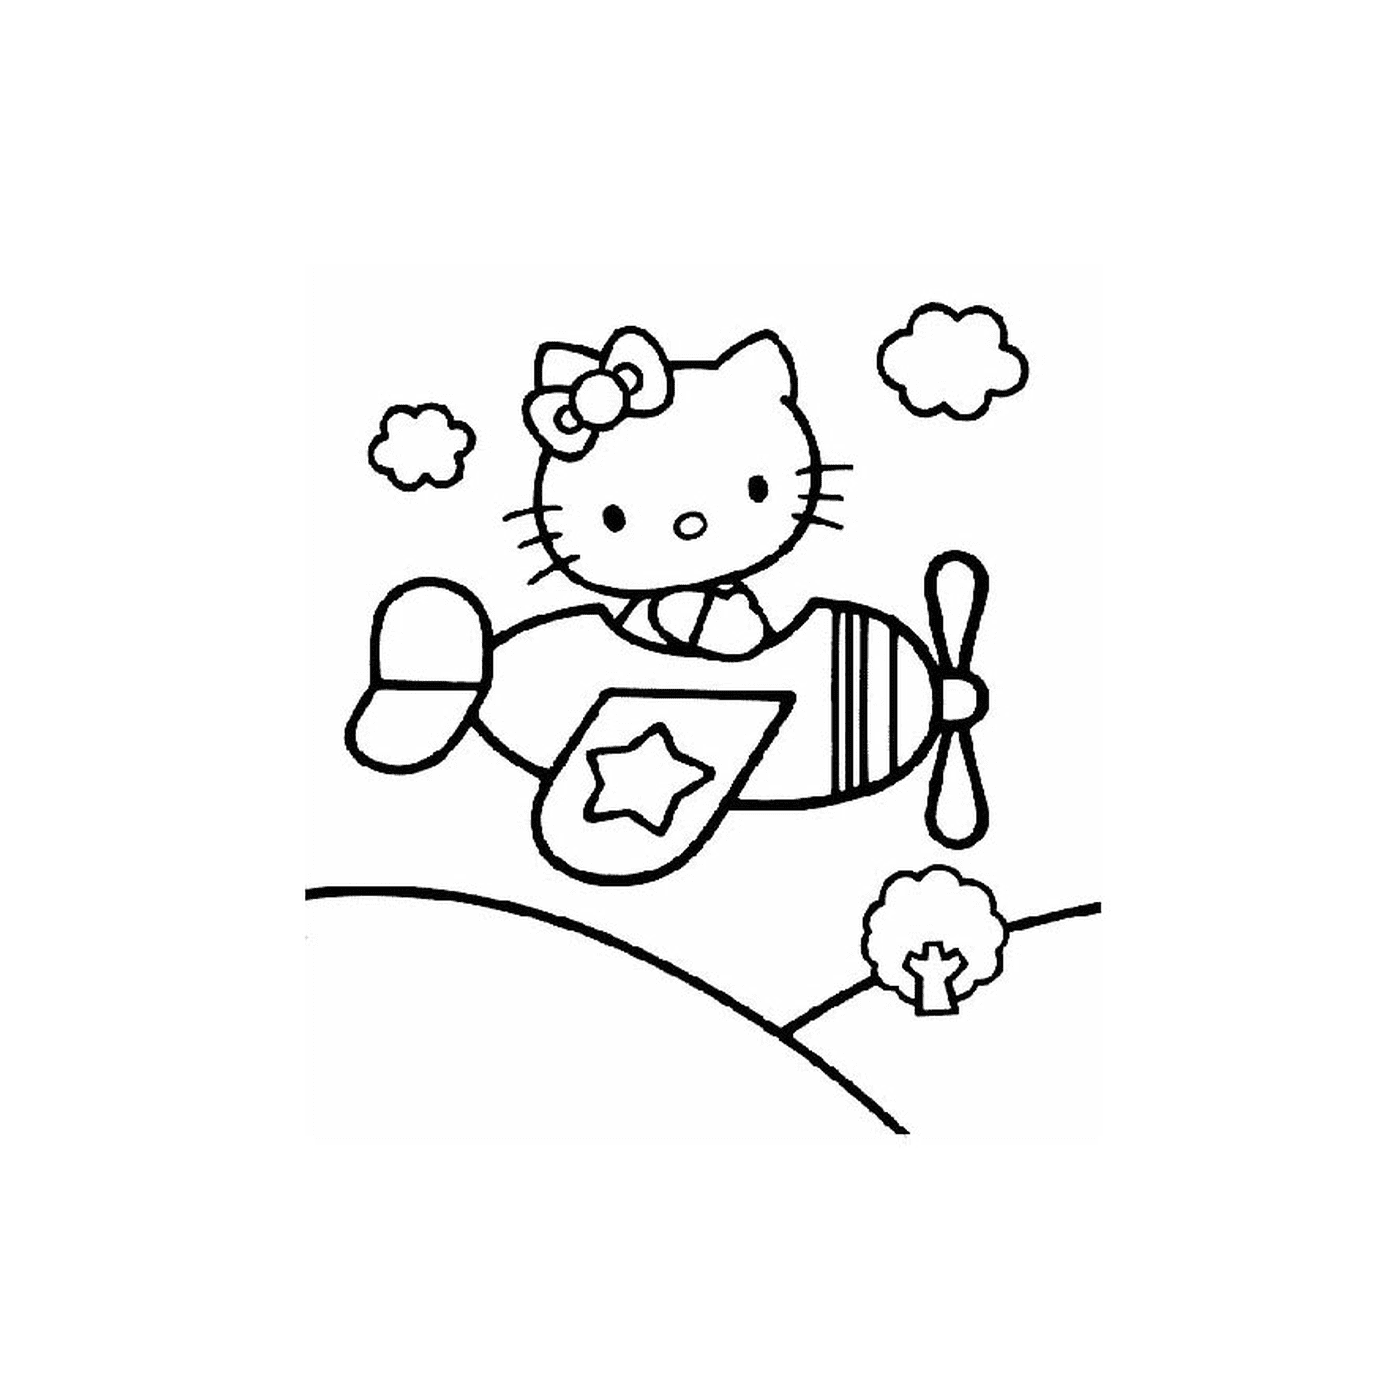   Hello Kitty volant sur un petit avion 